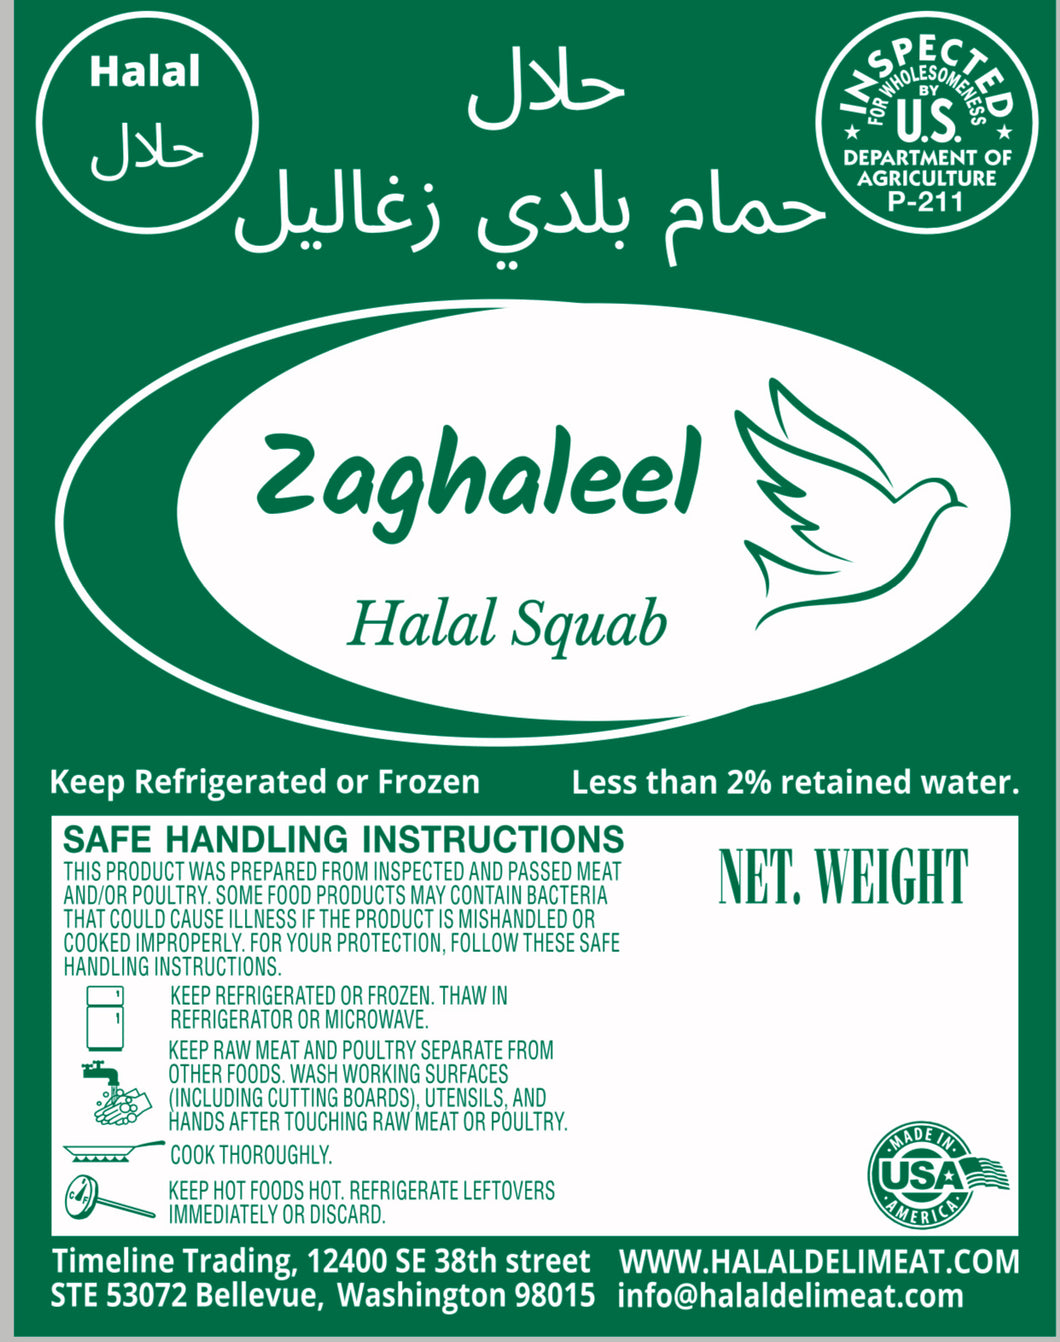 Halal Squab Zaghaleel (حمام بلدي زغاليل)